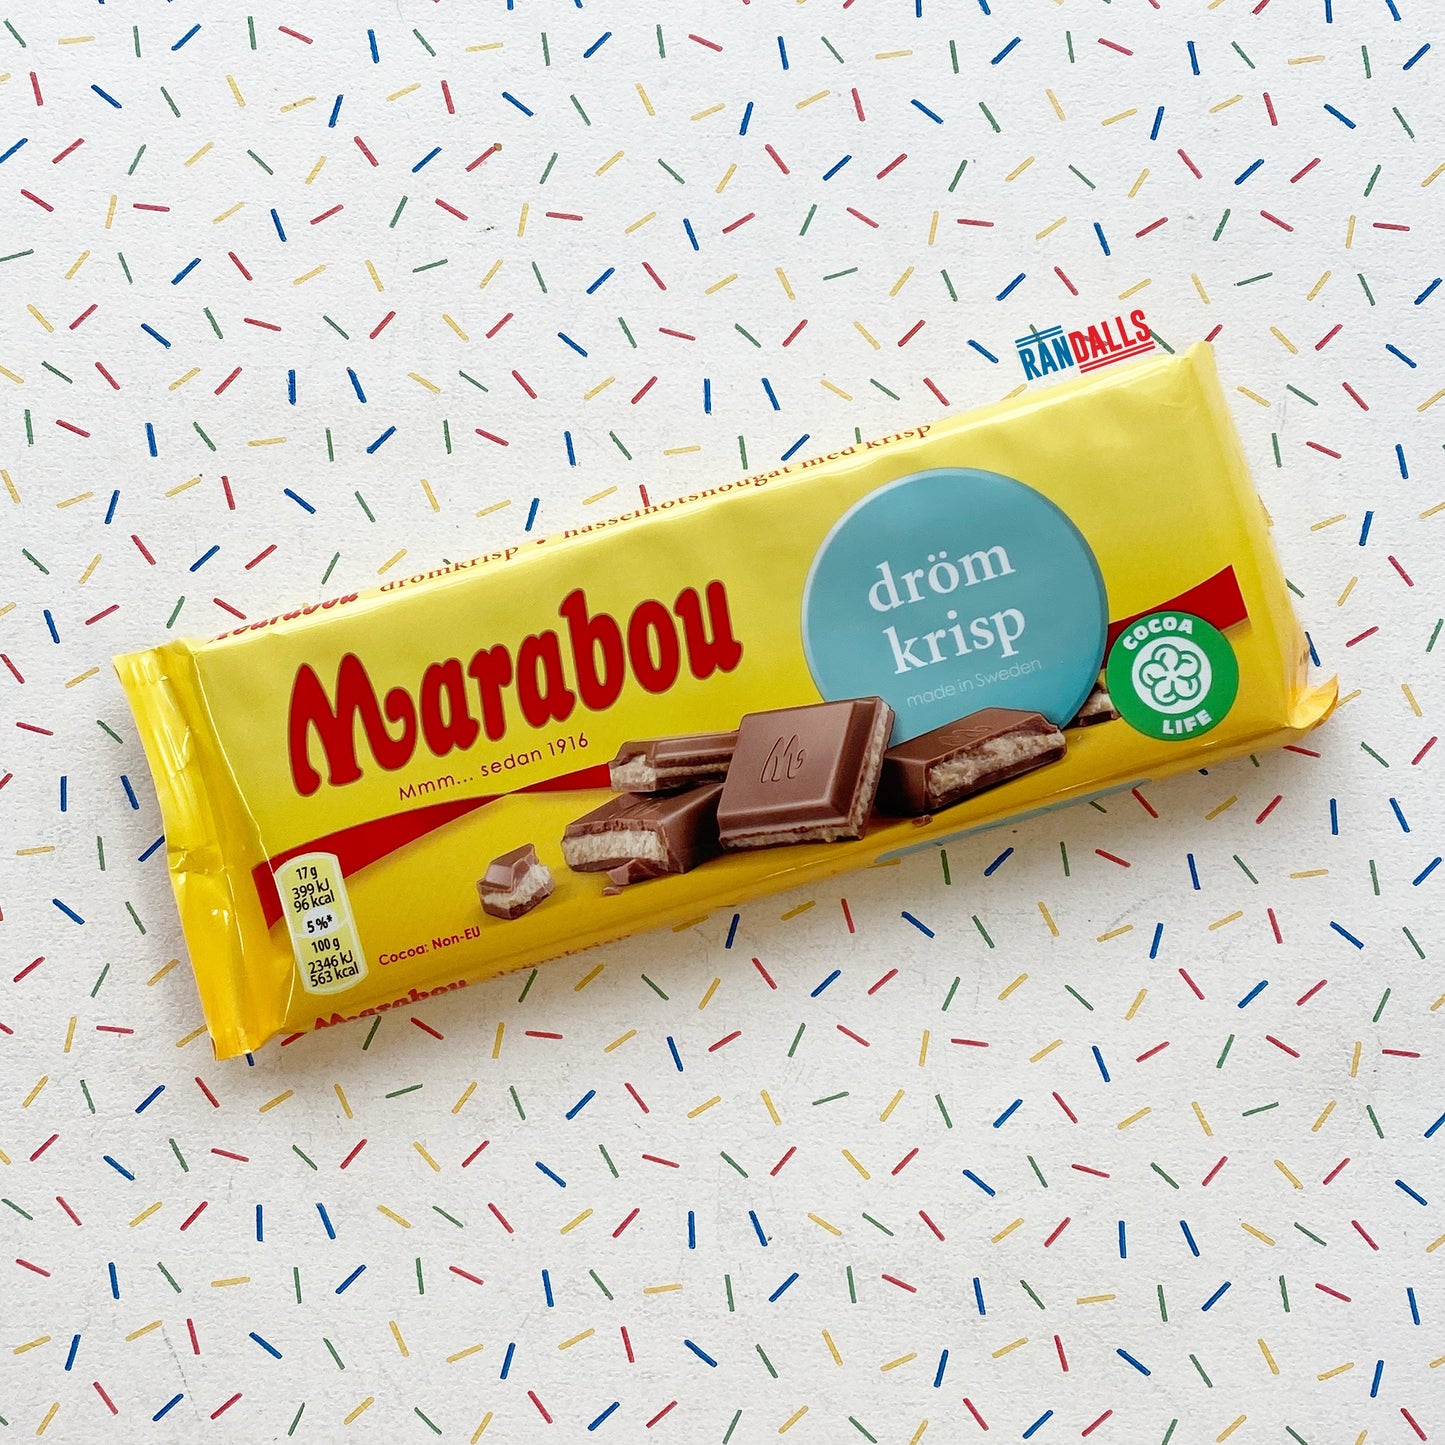 marabou dromkrisp, hazelnut nougat chocolate, sweden, swedish, crispy, nuts, crunchy, randalls